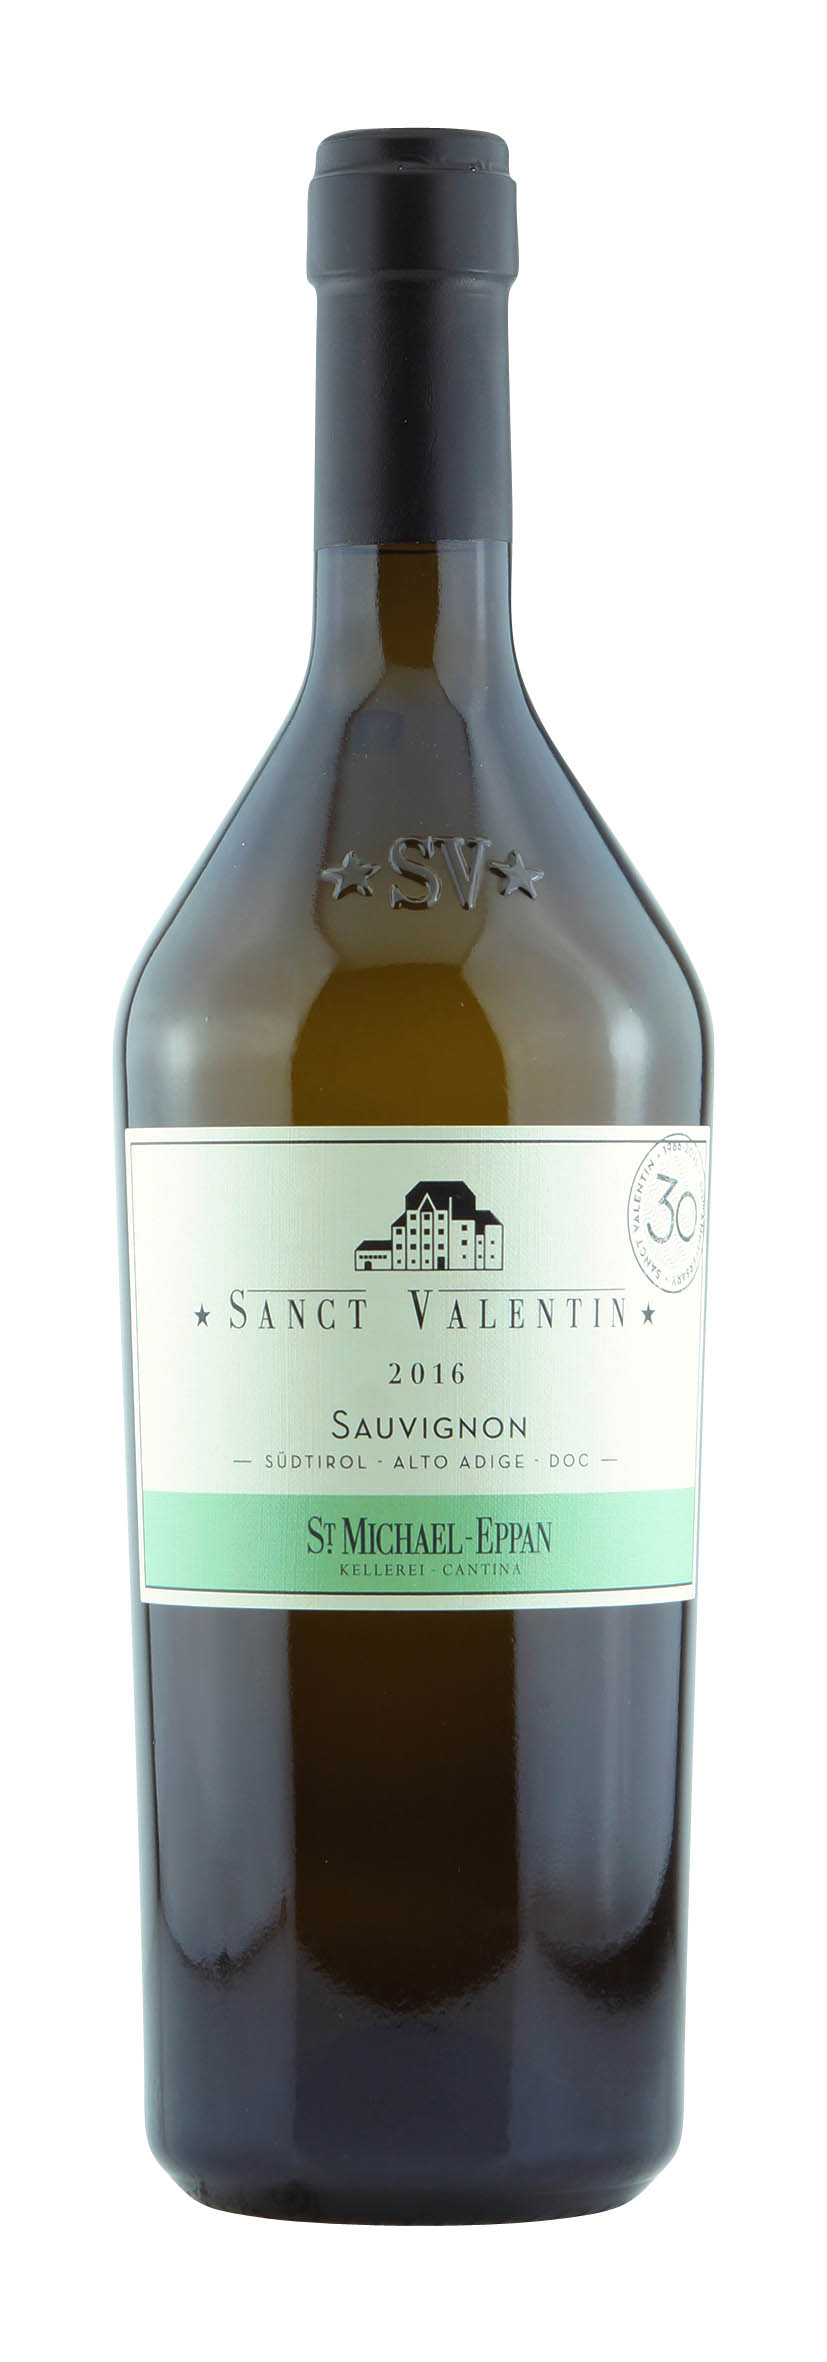 Südtirol DOC Sauvignon Blanc Sanct Valentin 2016